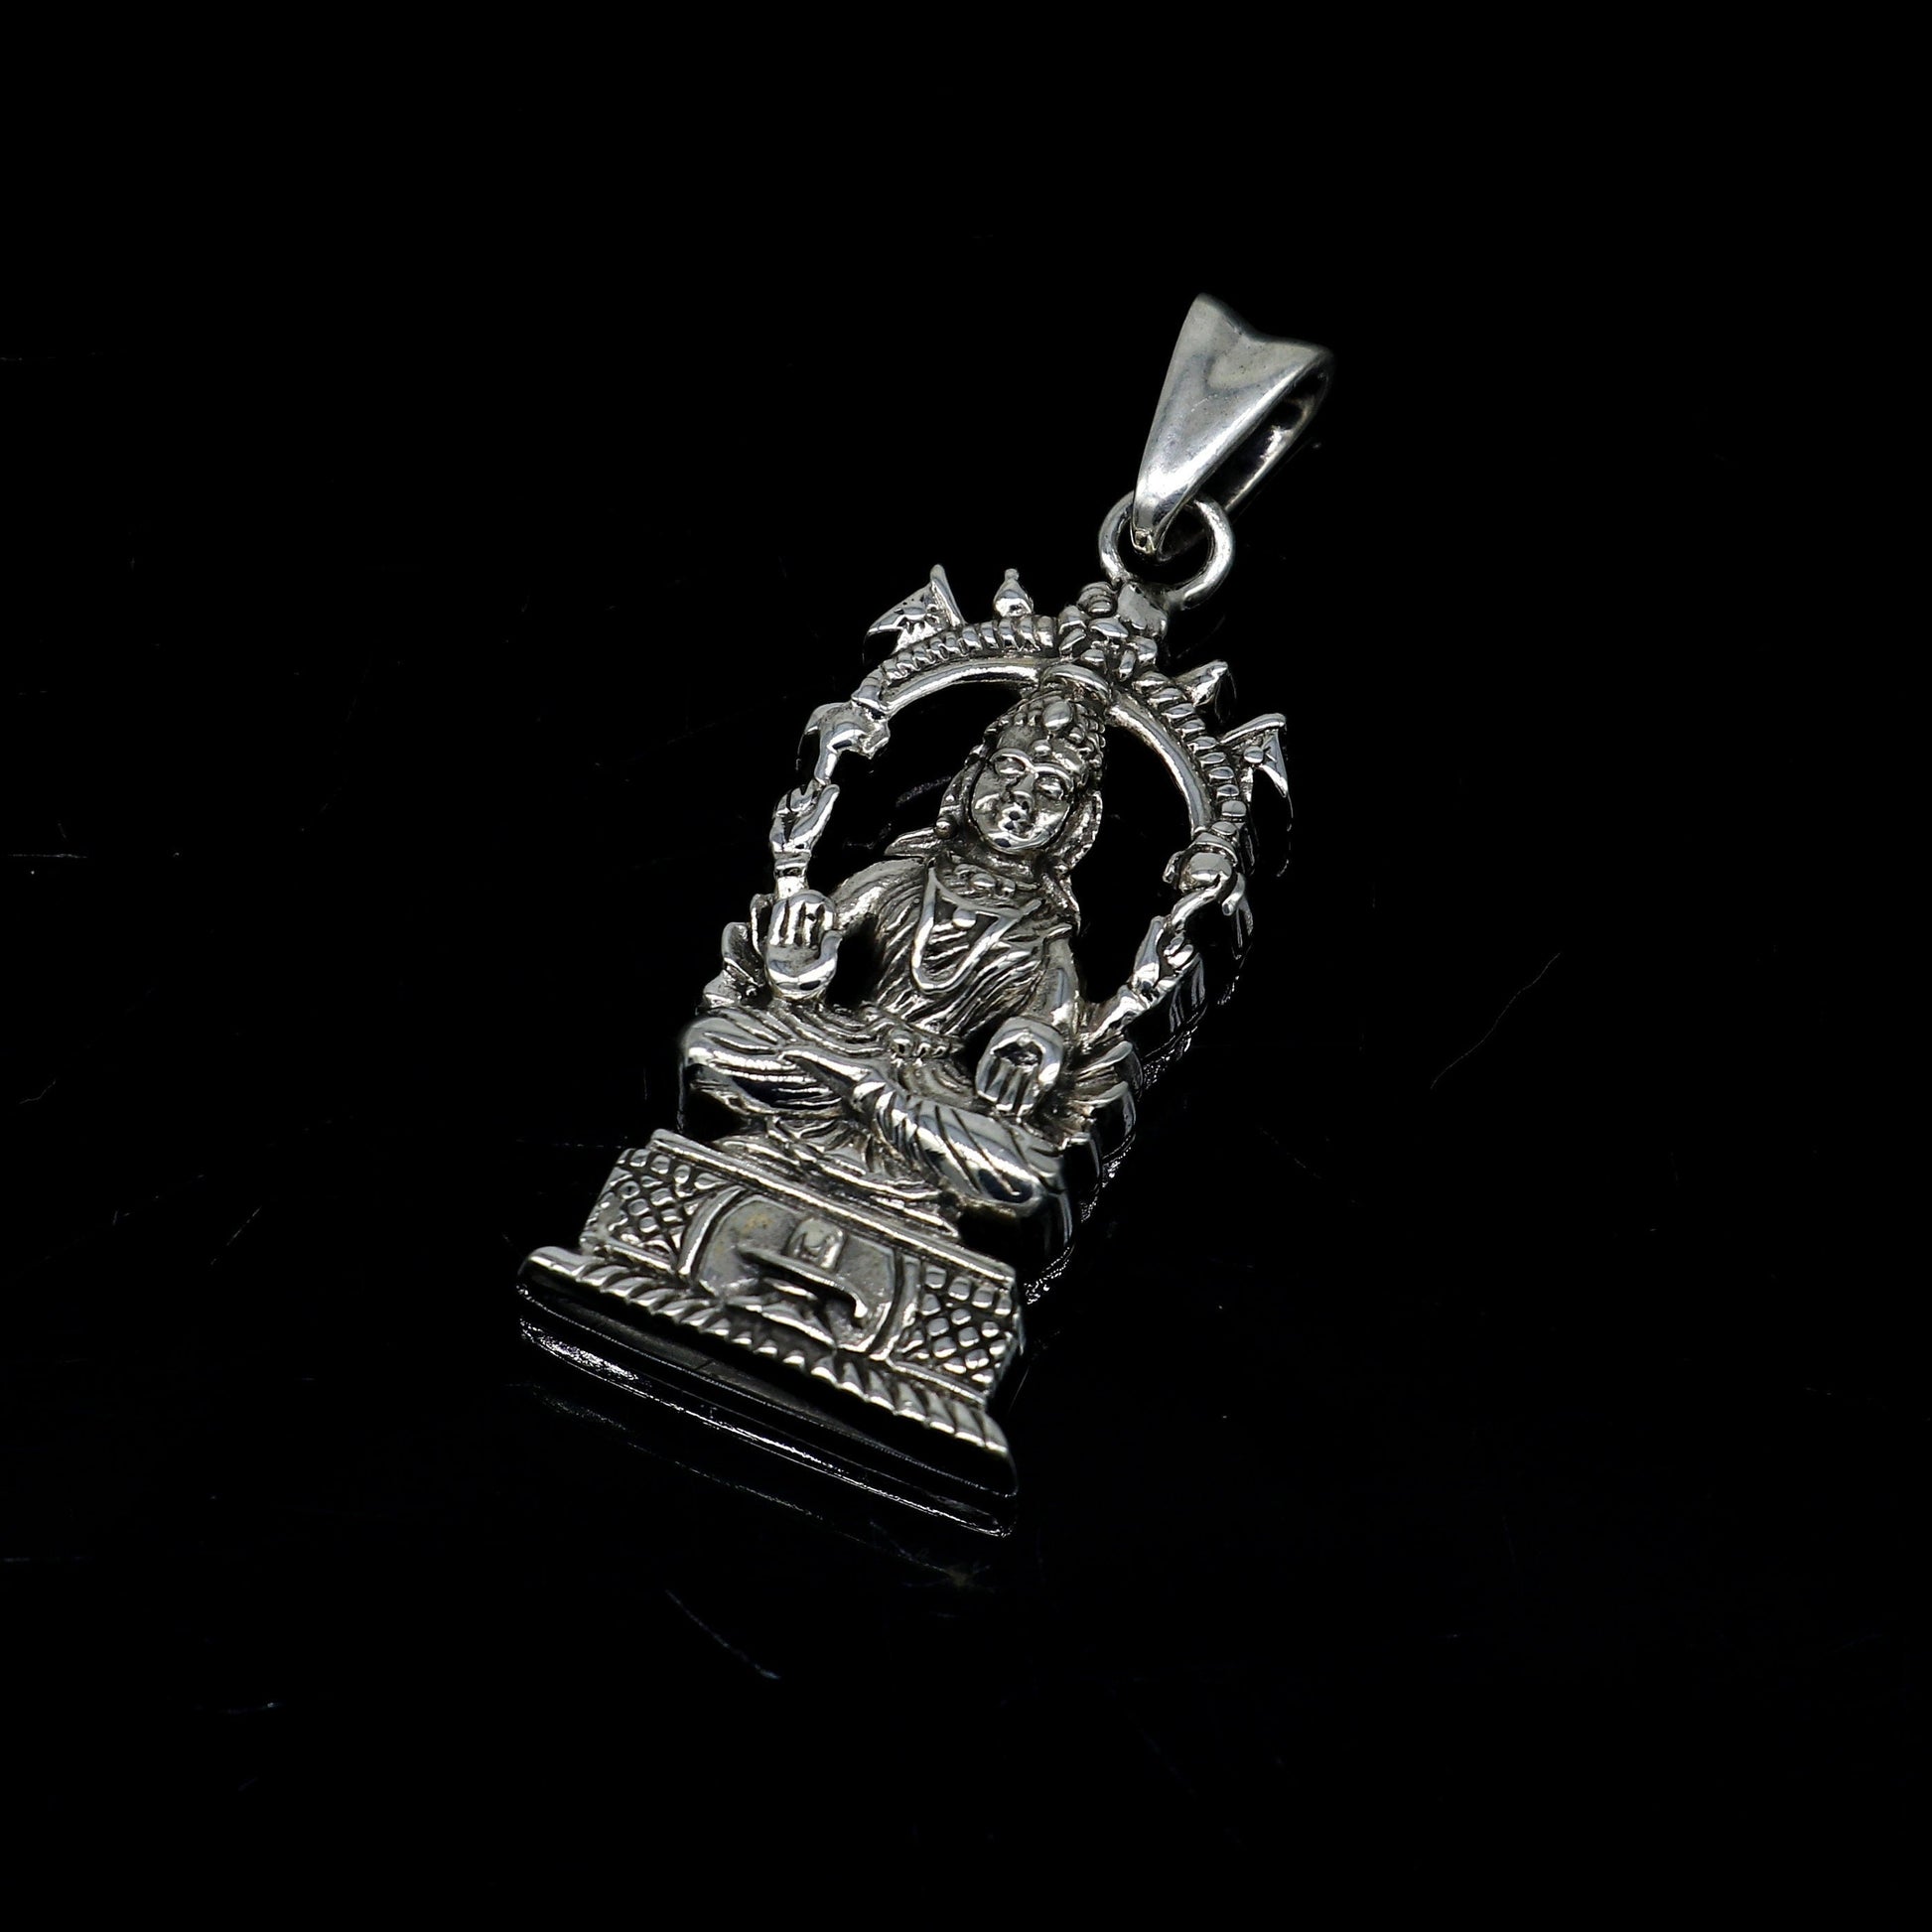 Pure 925 sterling silver vintage Antique stylish Hindu goddess Laxmi Pendant, amazing design stunning pendant unisex gifting jewelry ssp530 - TRIBAL ORNAMENTS